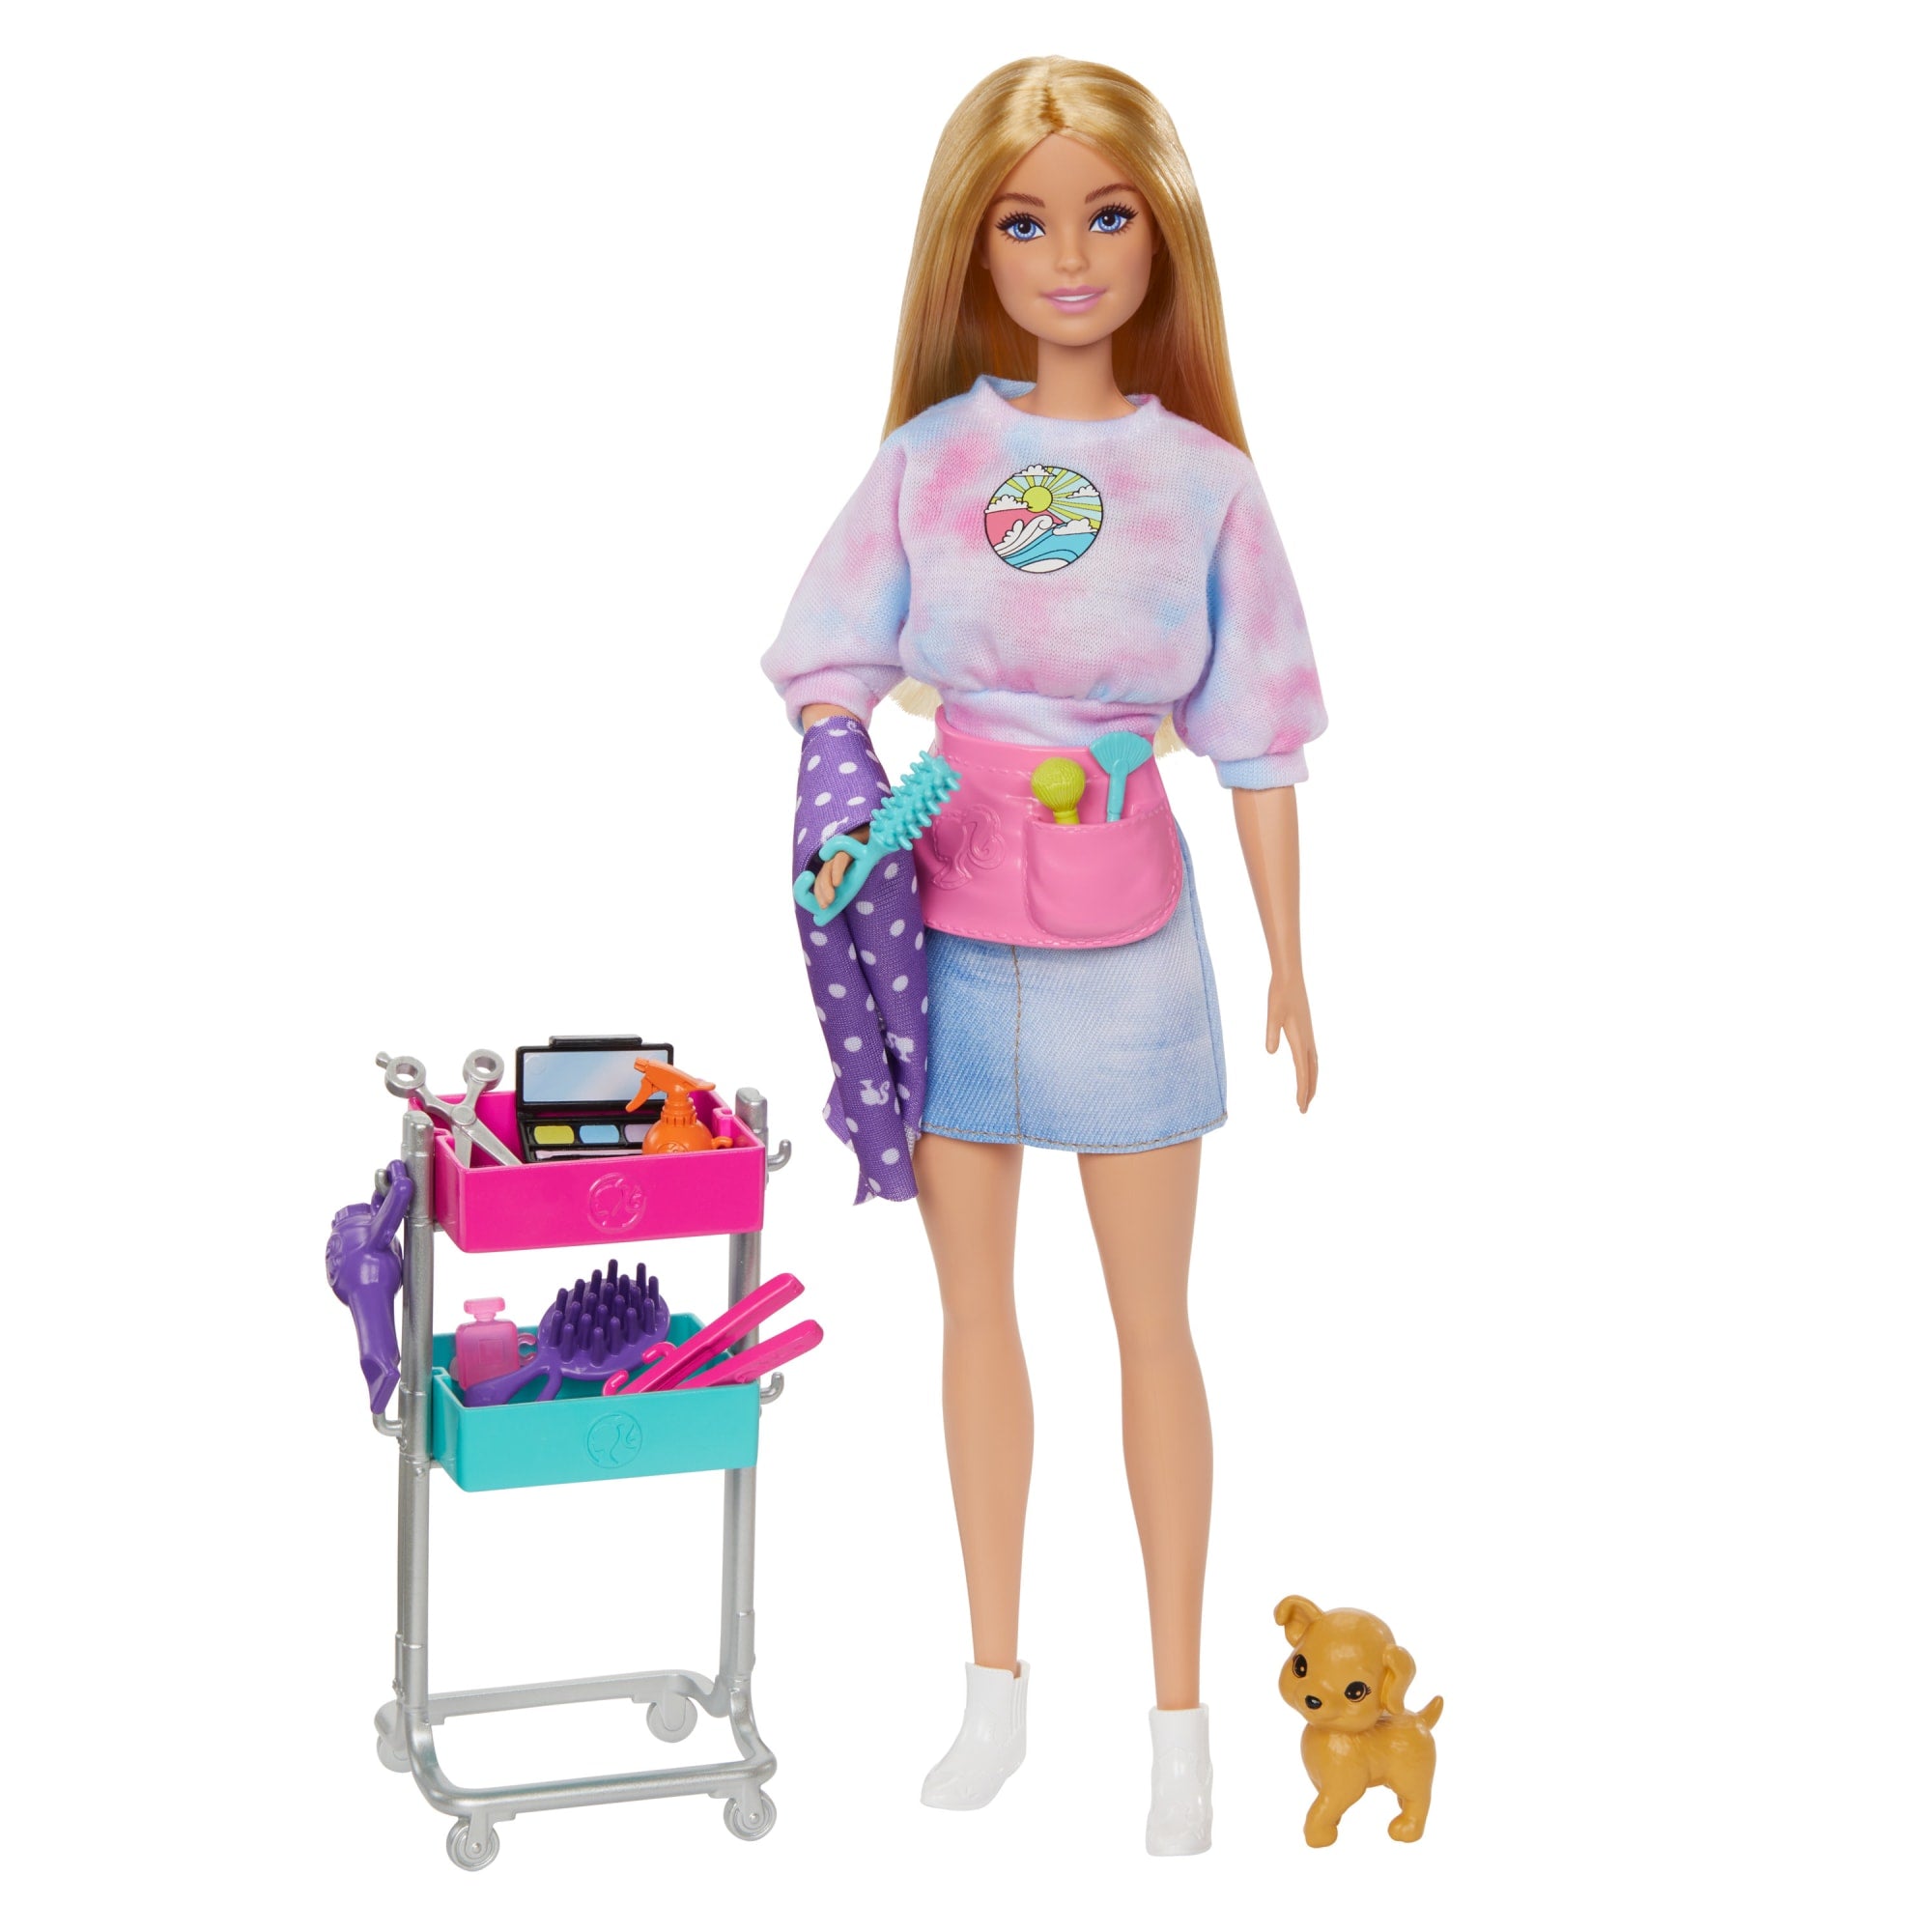 Barbie Smoothie Bar Playset, Blonde Barbie Doll, Smoothie Bar & 10 Accessories